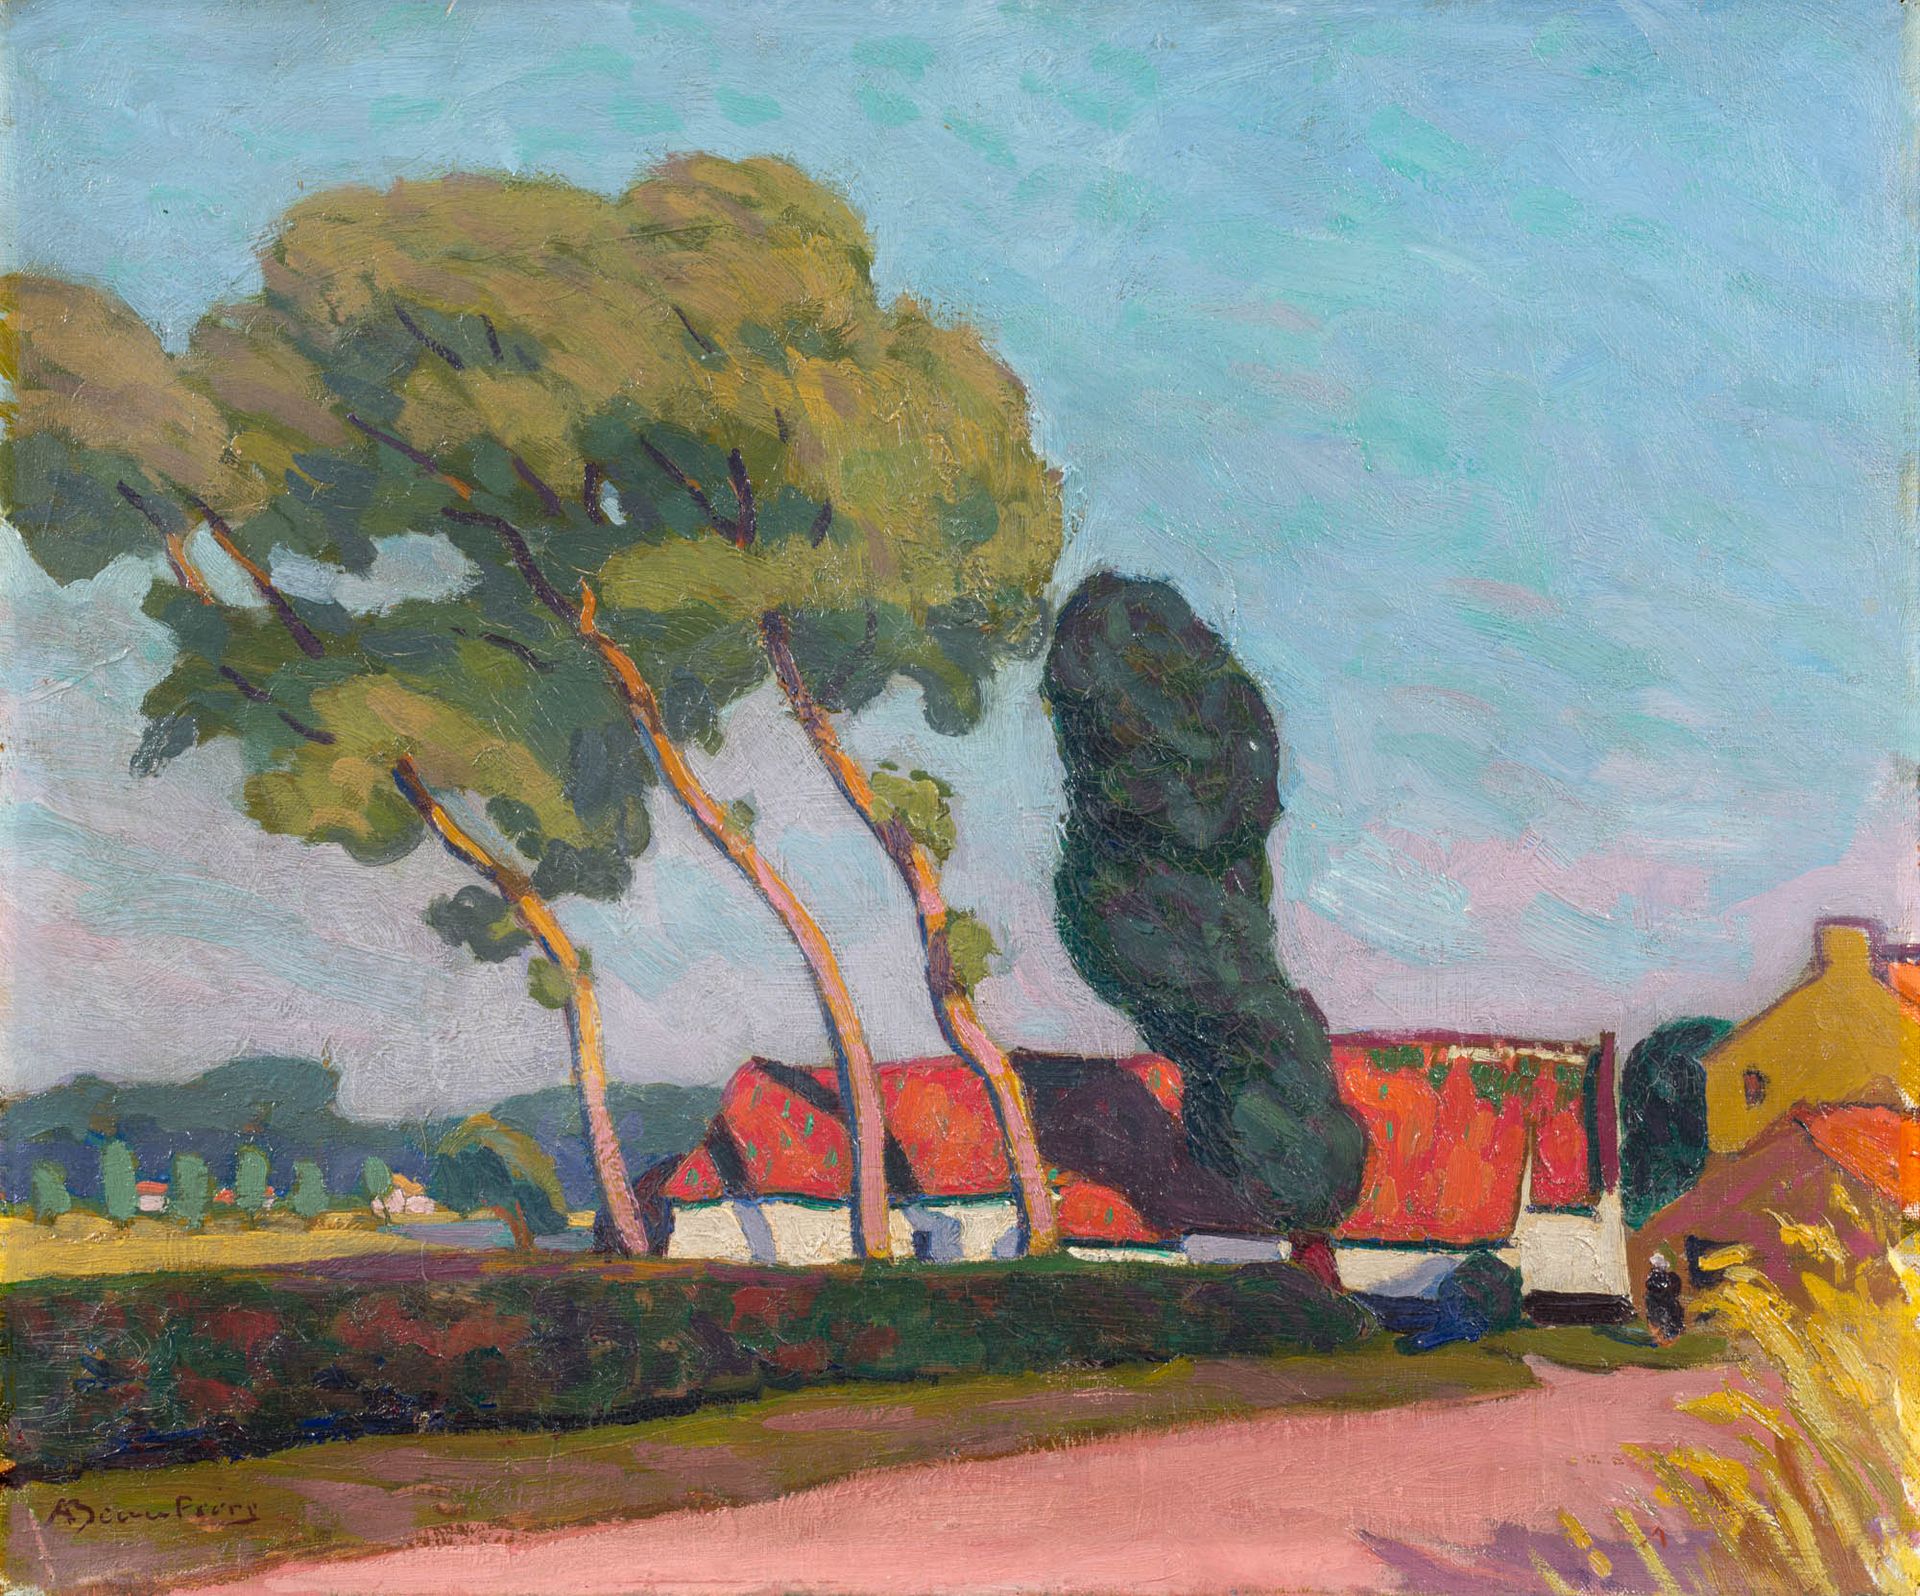 Adolphe Beaufrère 1876–1960 阿道夫-博夫雷1876-1960年

缴费

布面油画

左下角署名ABeauFrere

45,5 x&hellip;